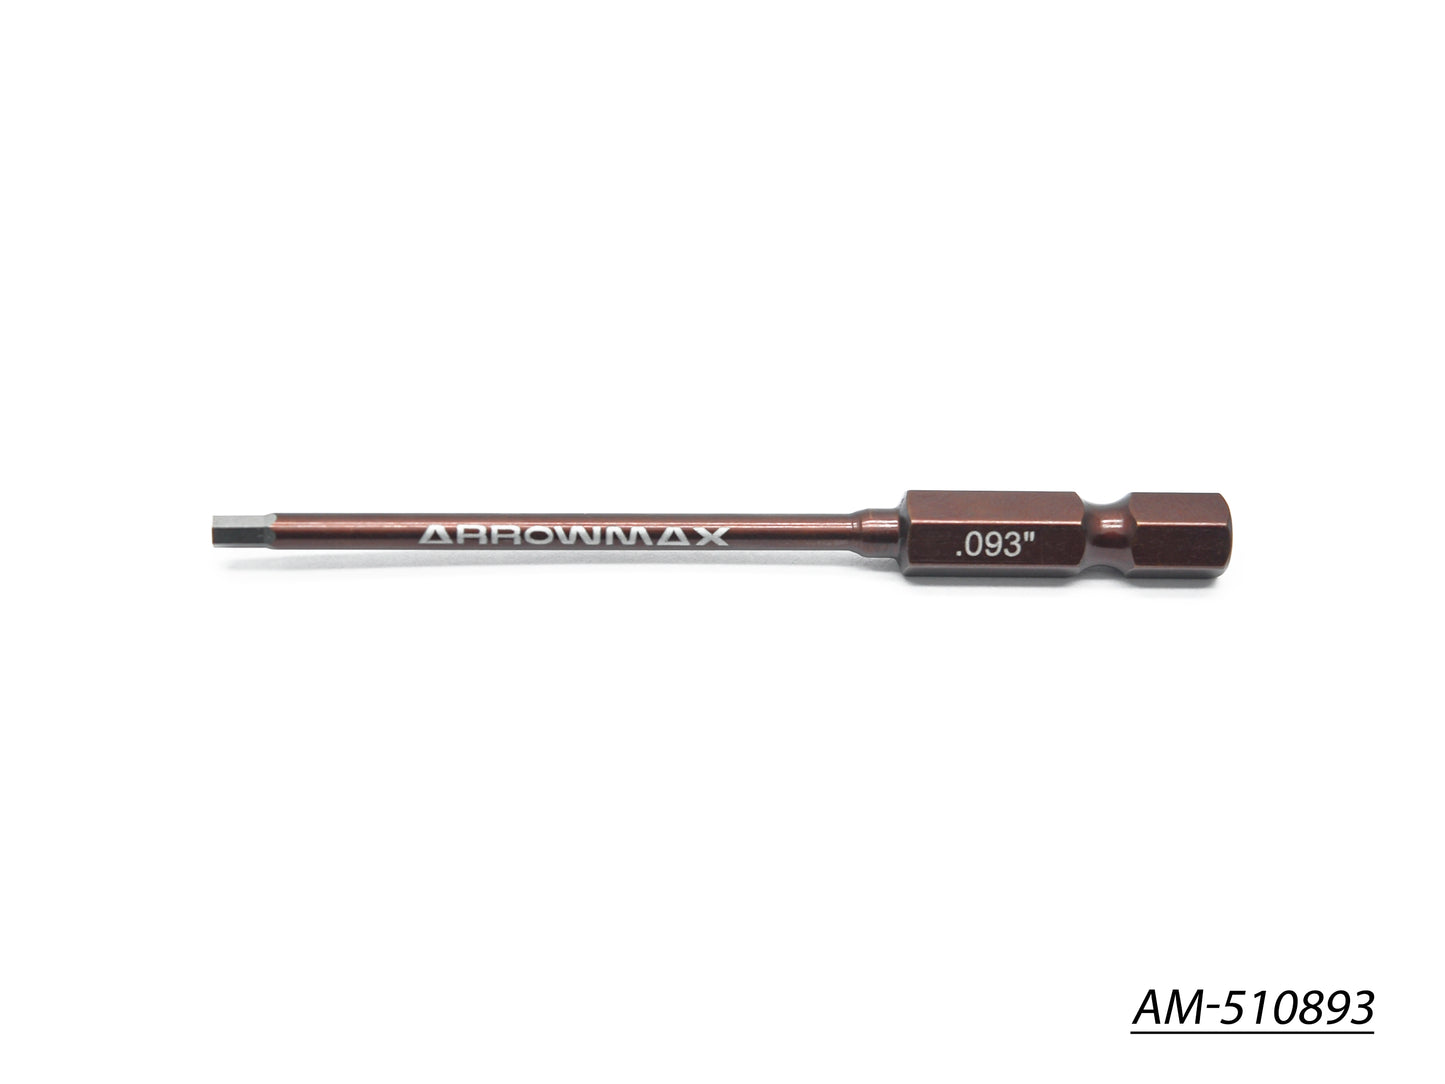 Allen Wrench .093 (3/32") X 80MM Power Tip Only AM-510893